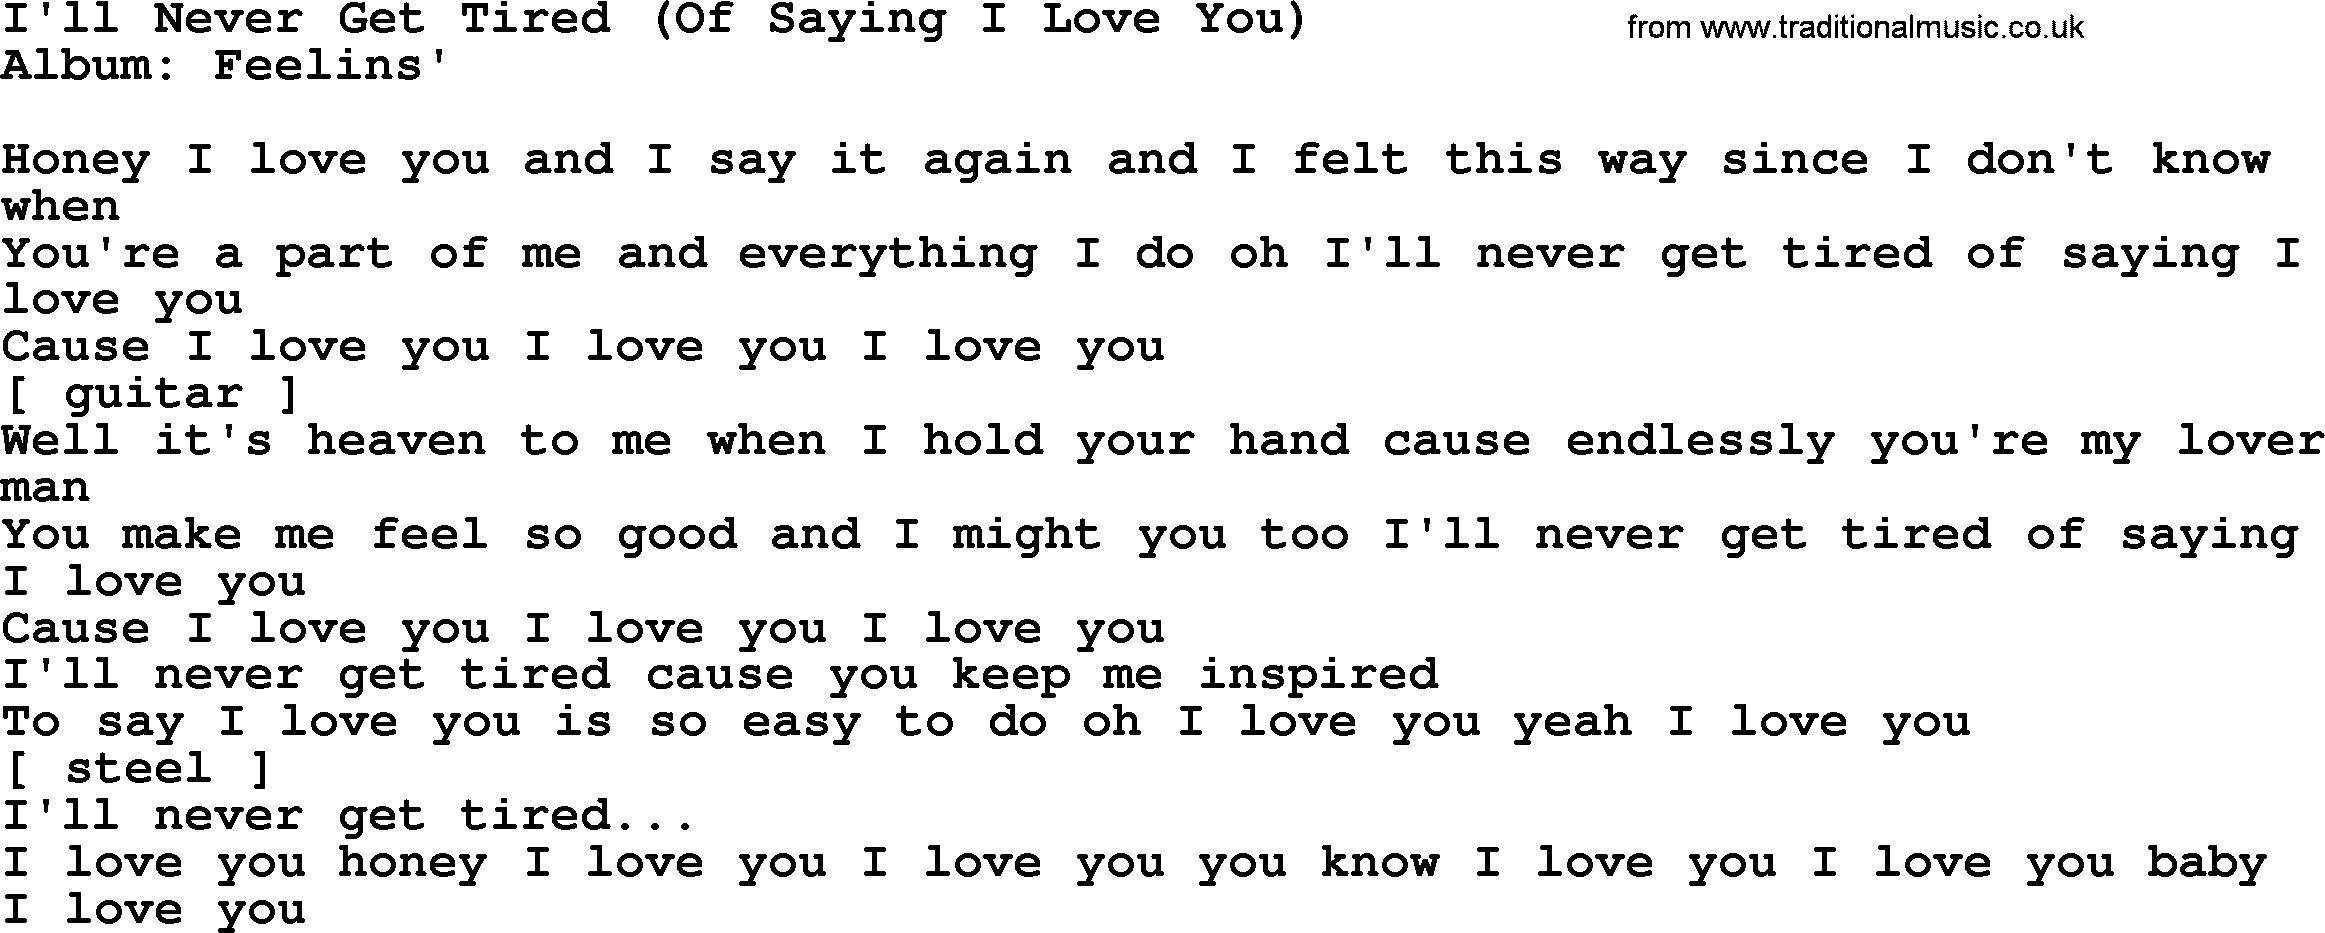 Loretta Lynn song: I'll Never Get Tired (Of Saying I Love You) lyrics